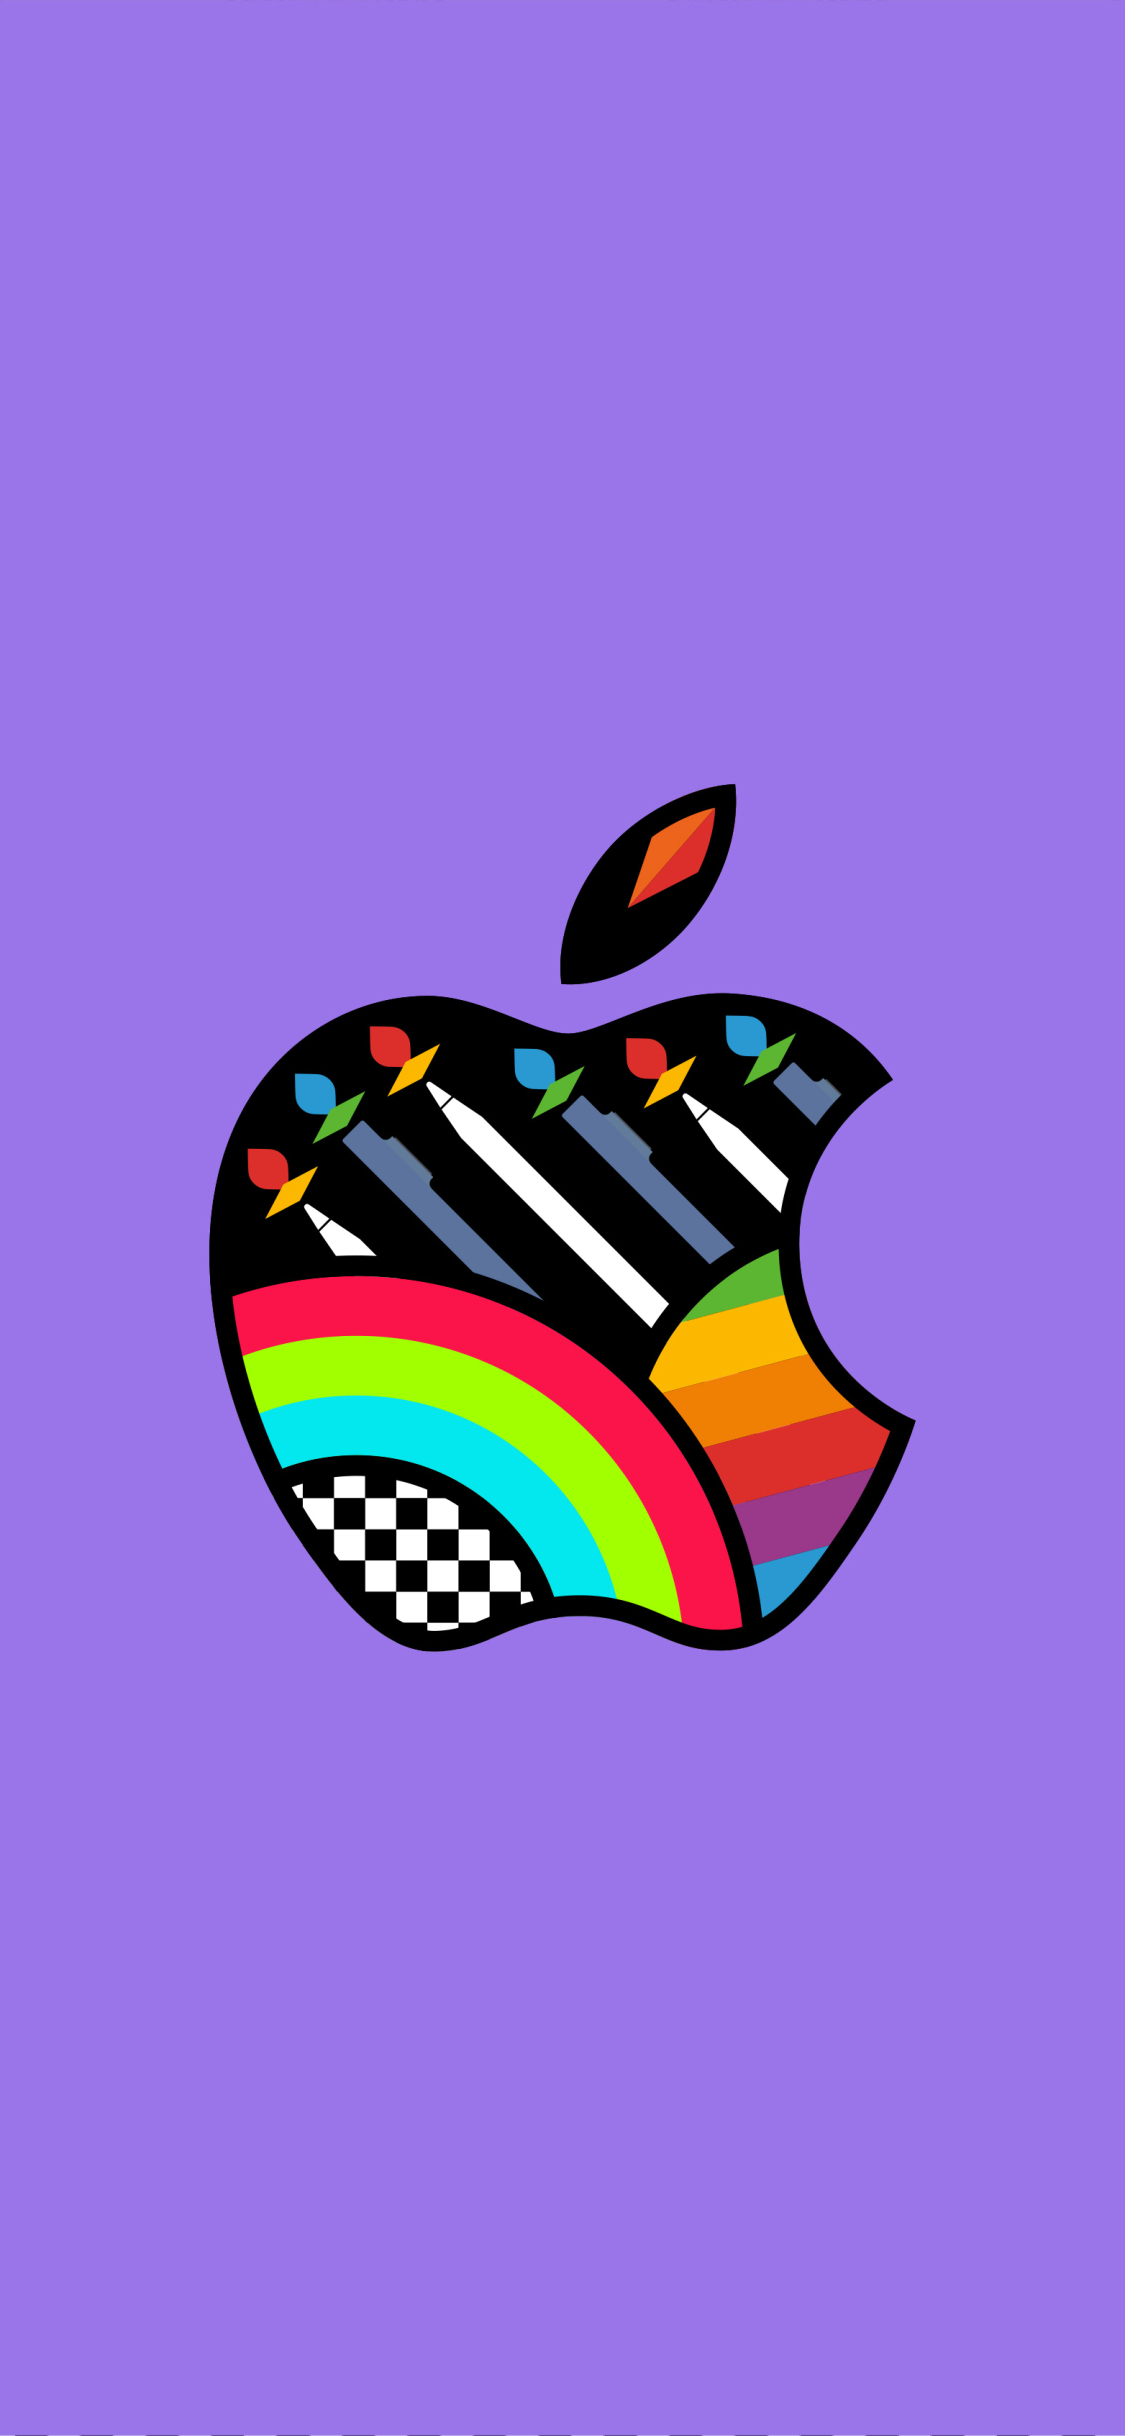 iPhone11papers.com | iPhone11 wallpaper | al57-logo-art-apple-rainbow -minimal